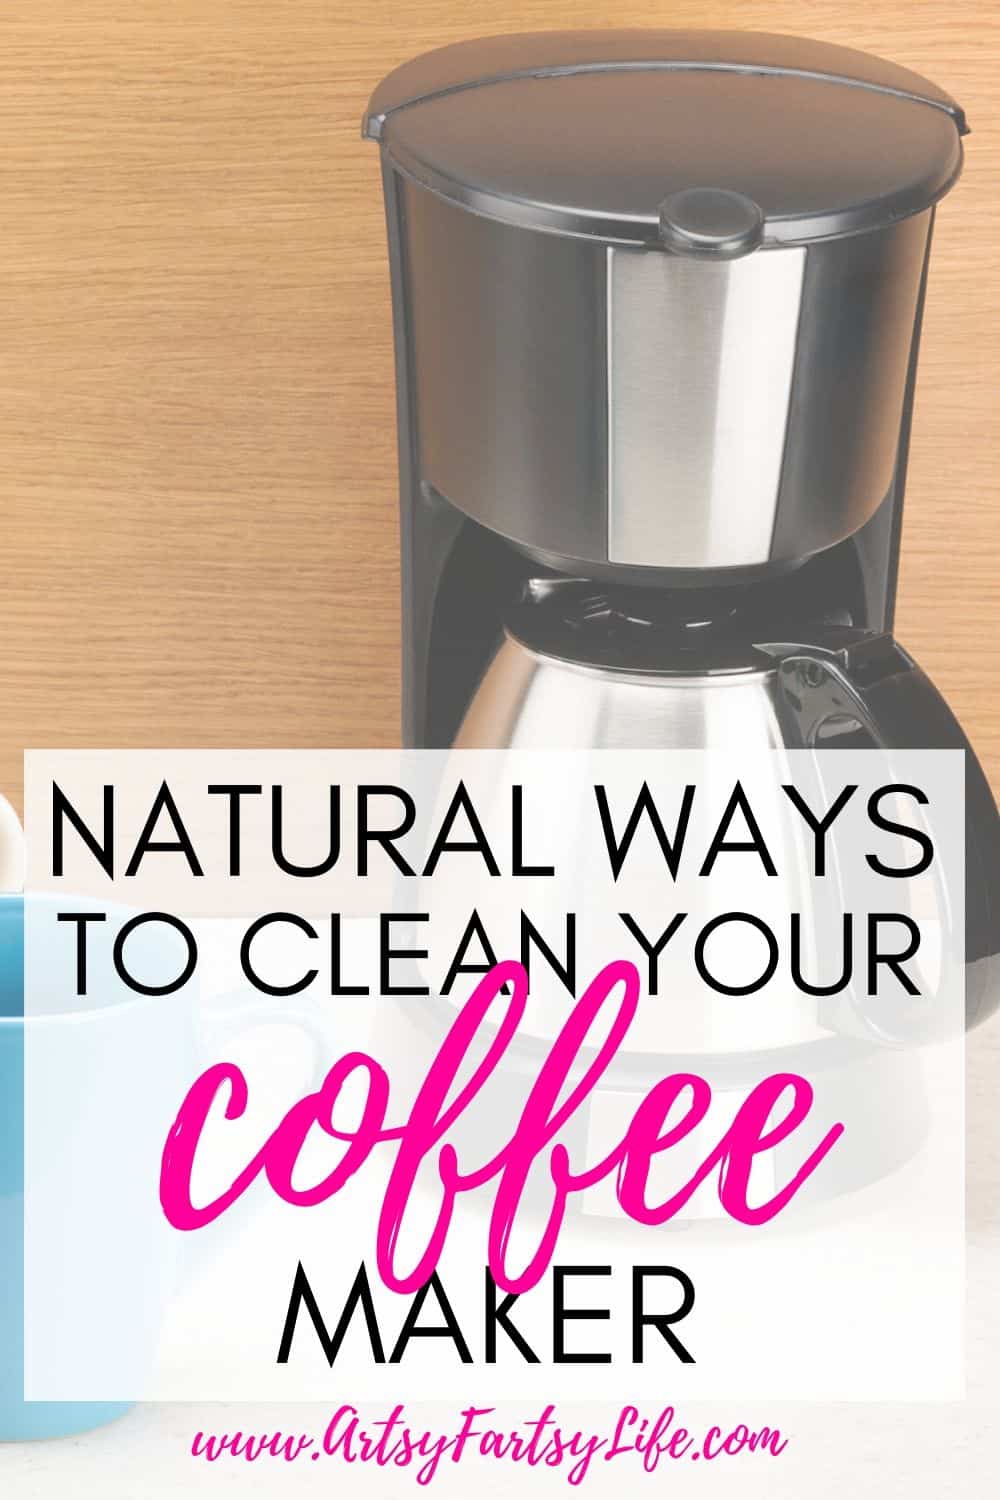 https://artsyfartsylife.com/wp-content/uploads/2019/11/Natural-Ways-To-Clean-Coffee-Maker.jpg